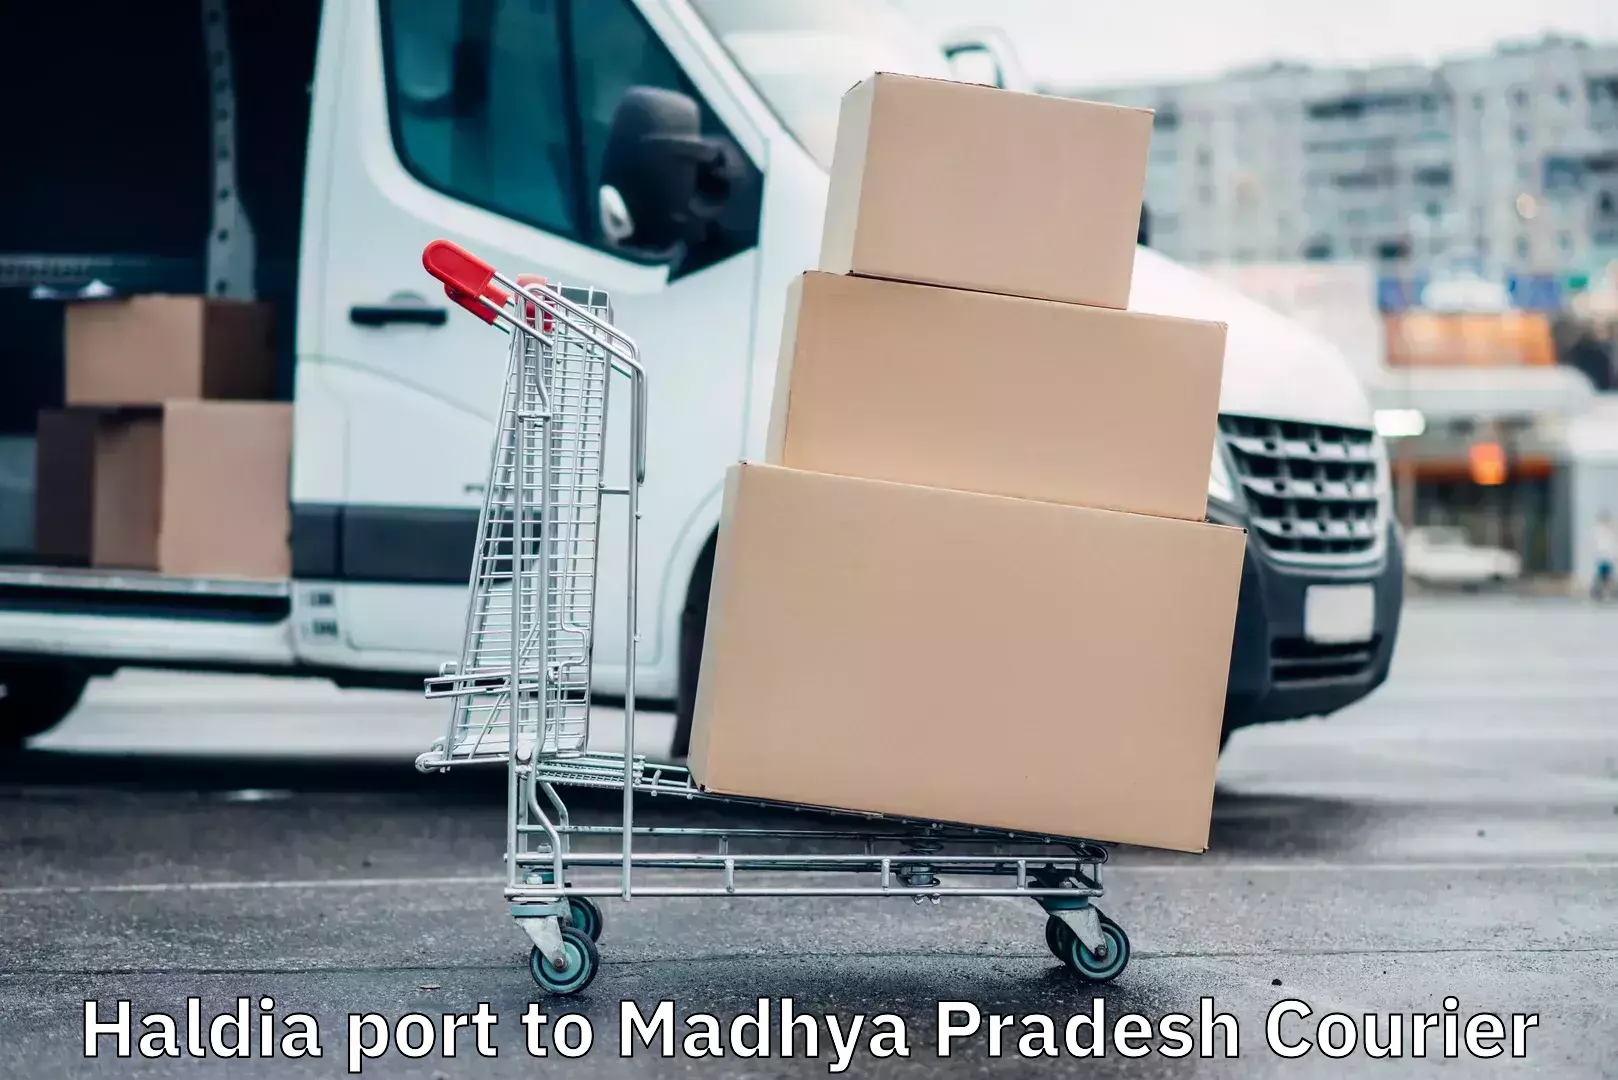 Quality courier services Haldia port to Madhya Pradesh